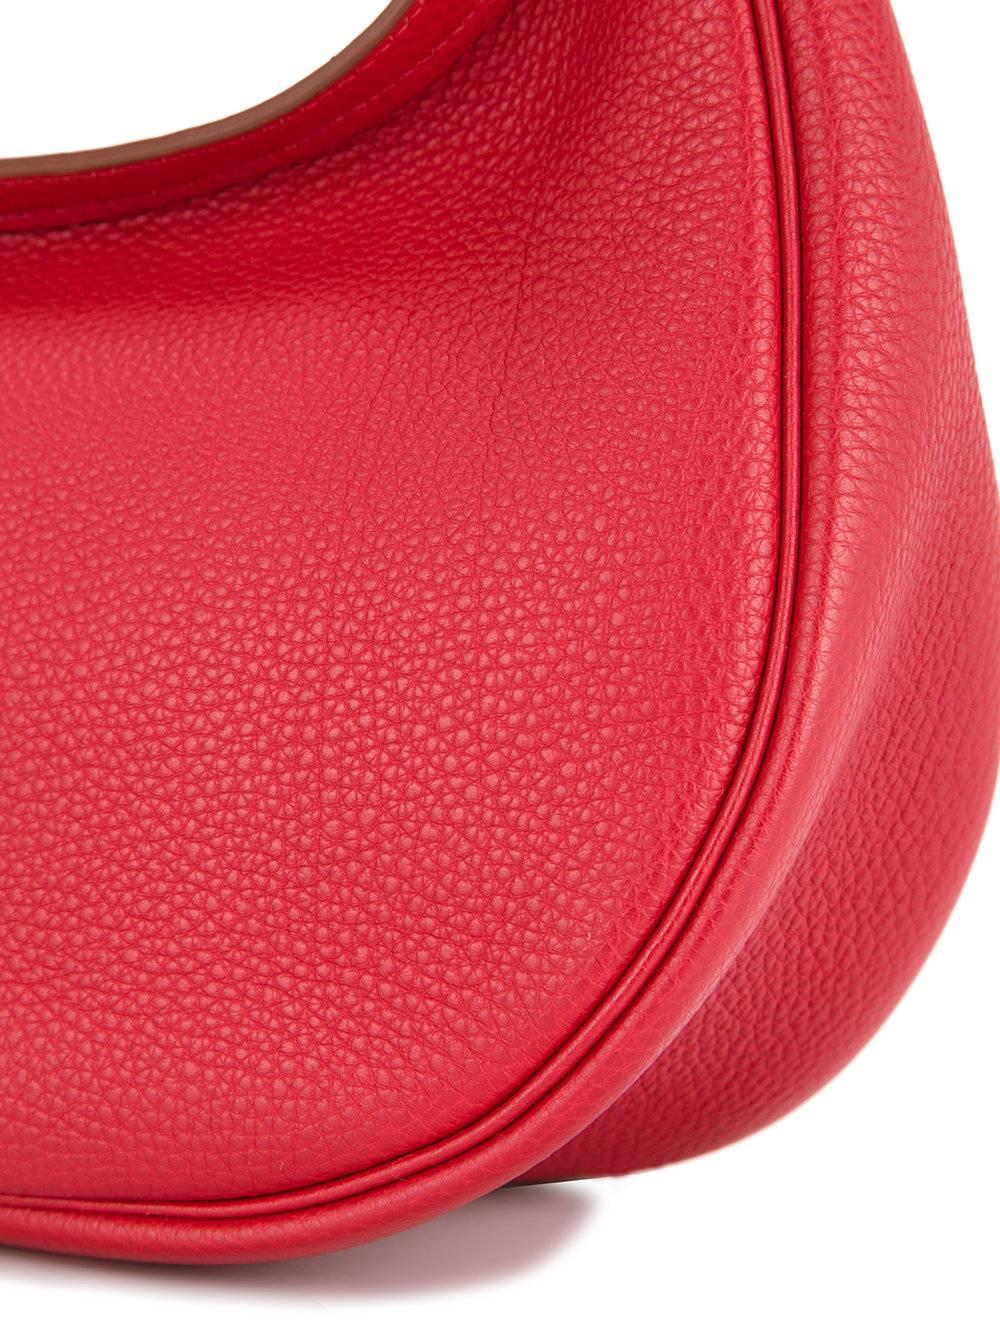 Women's Hermes Red Leather Triple Strap Top Handle Evening Satchel Shoulder Bag